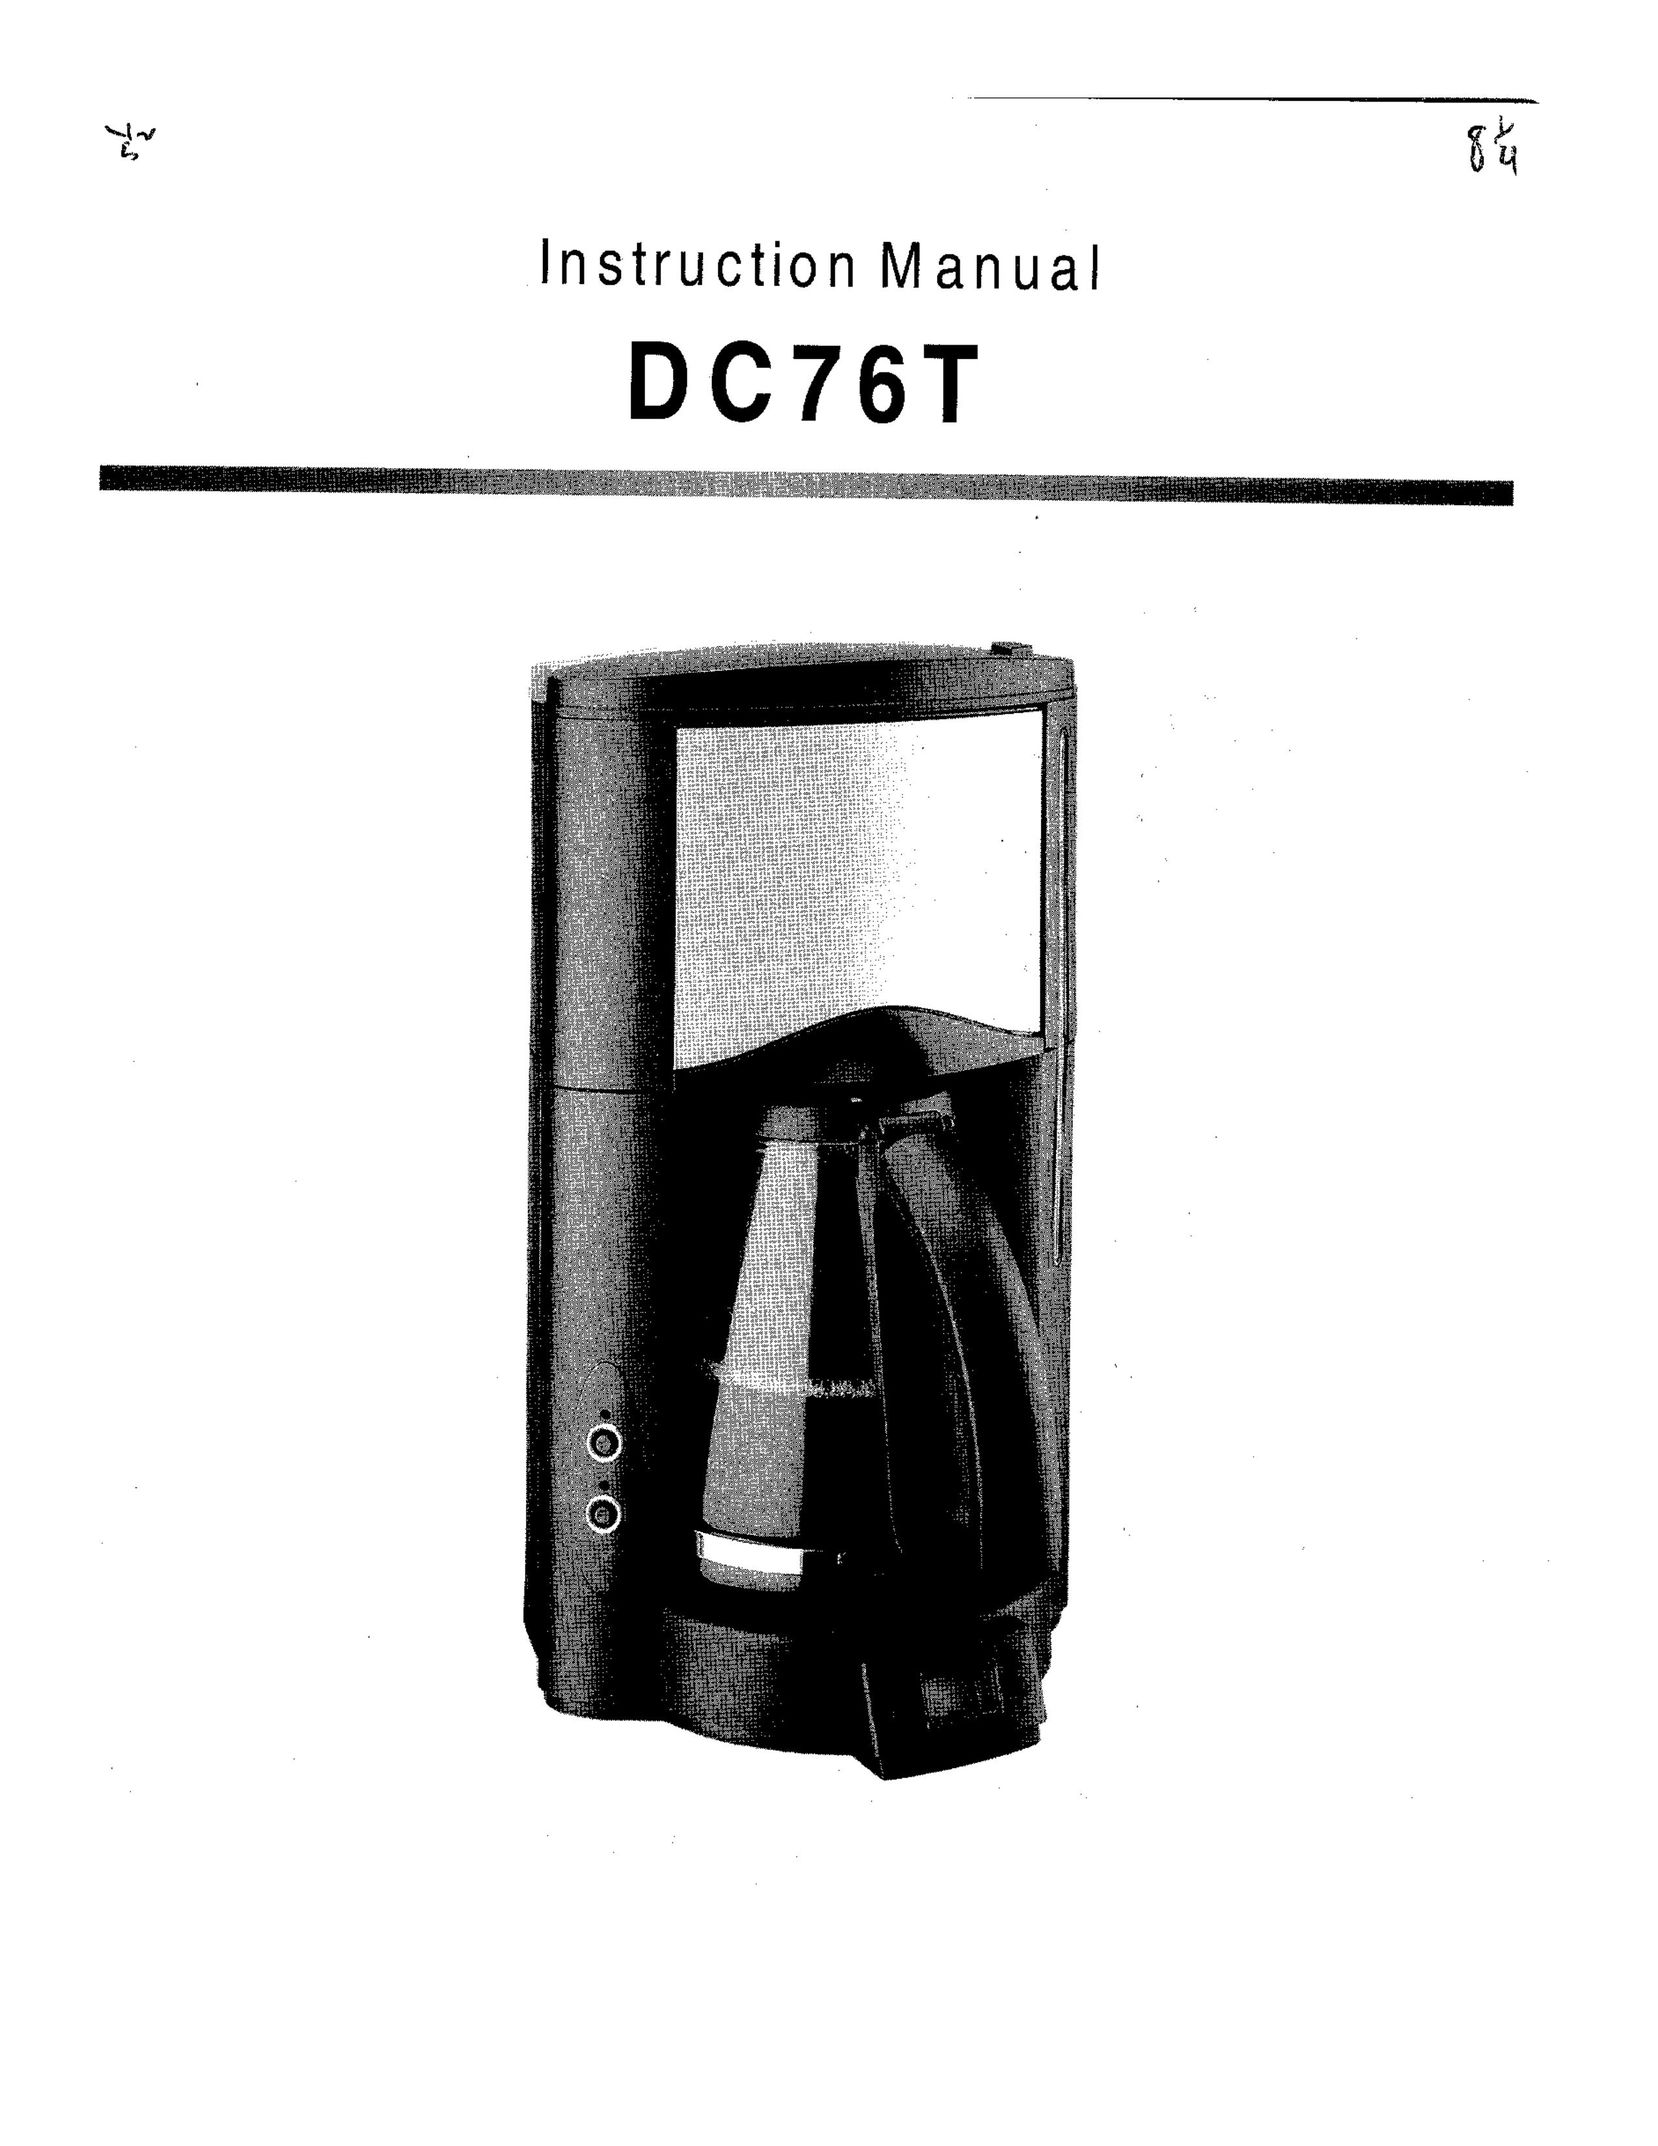 DeLonghi DC76T Coffeemaker User Manual